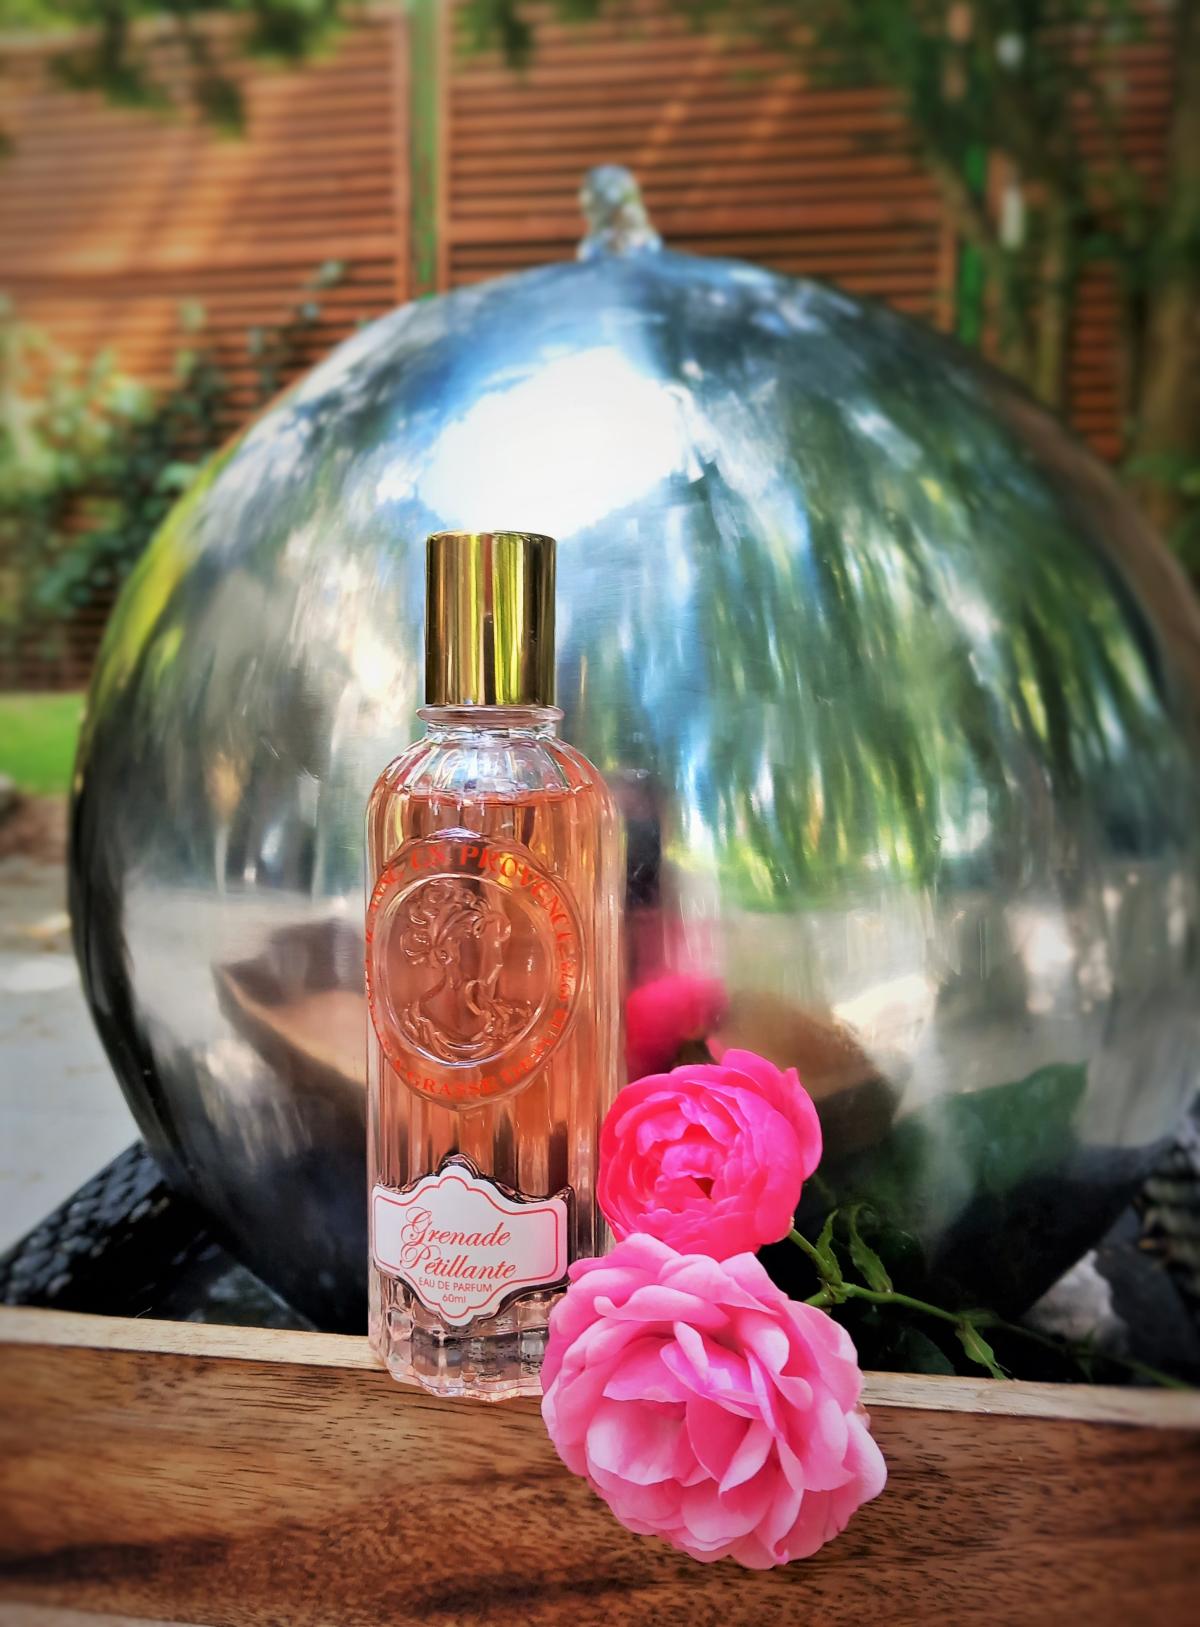 Grenade Petillante Jeanne en Provence perfume - a new fragrance for ...